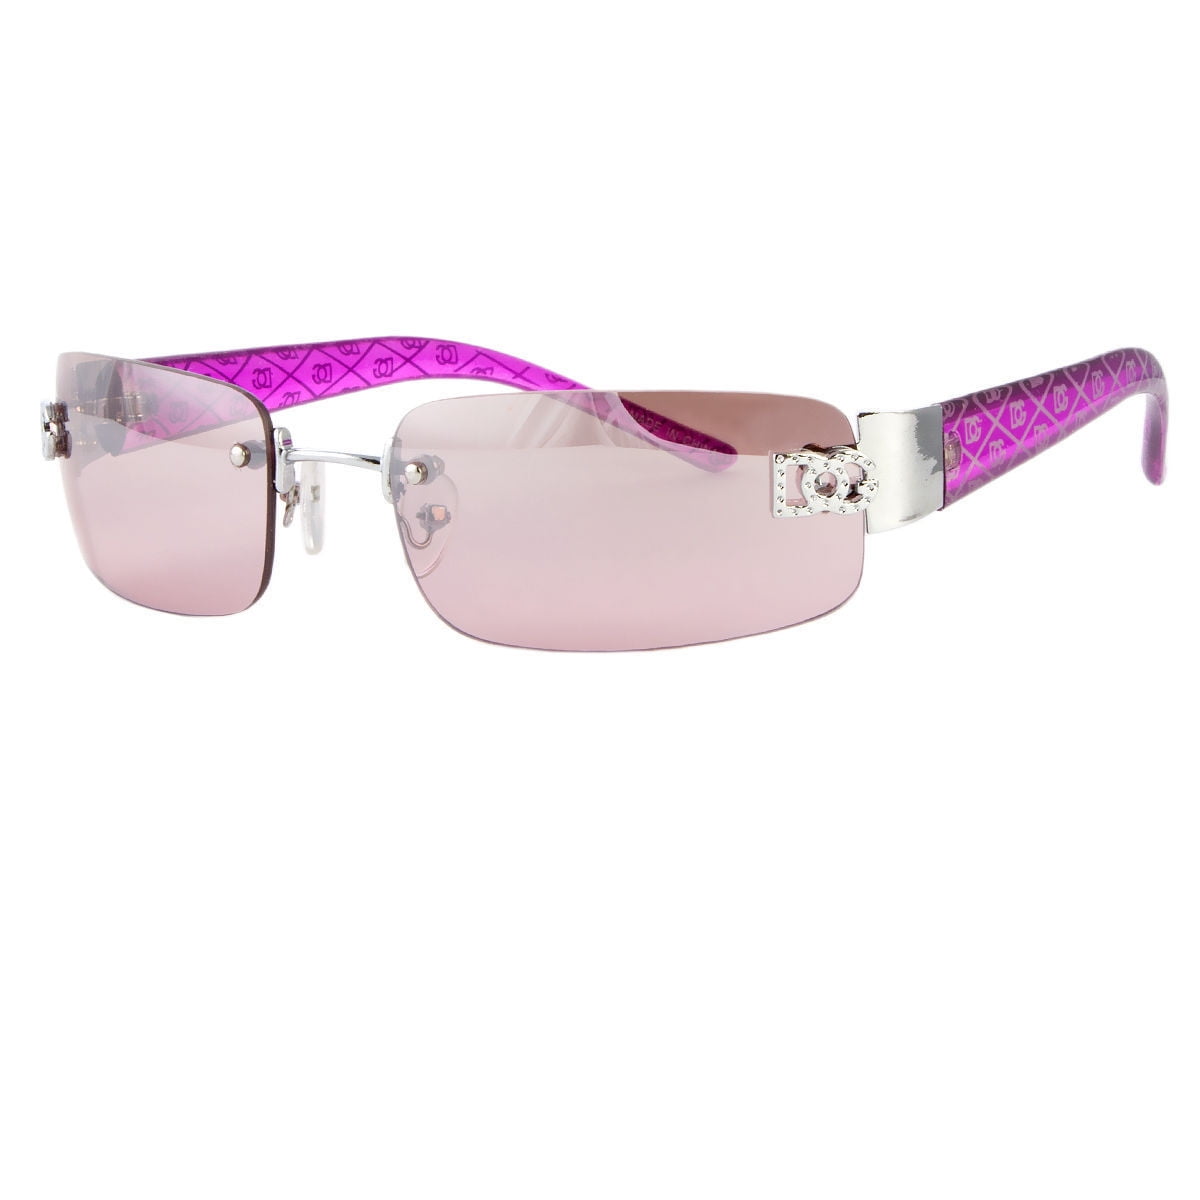 NEW Wholesale lot Men's DG Eyewear Rimless Small Tint Shades Designer Sunglasses 